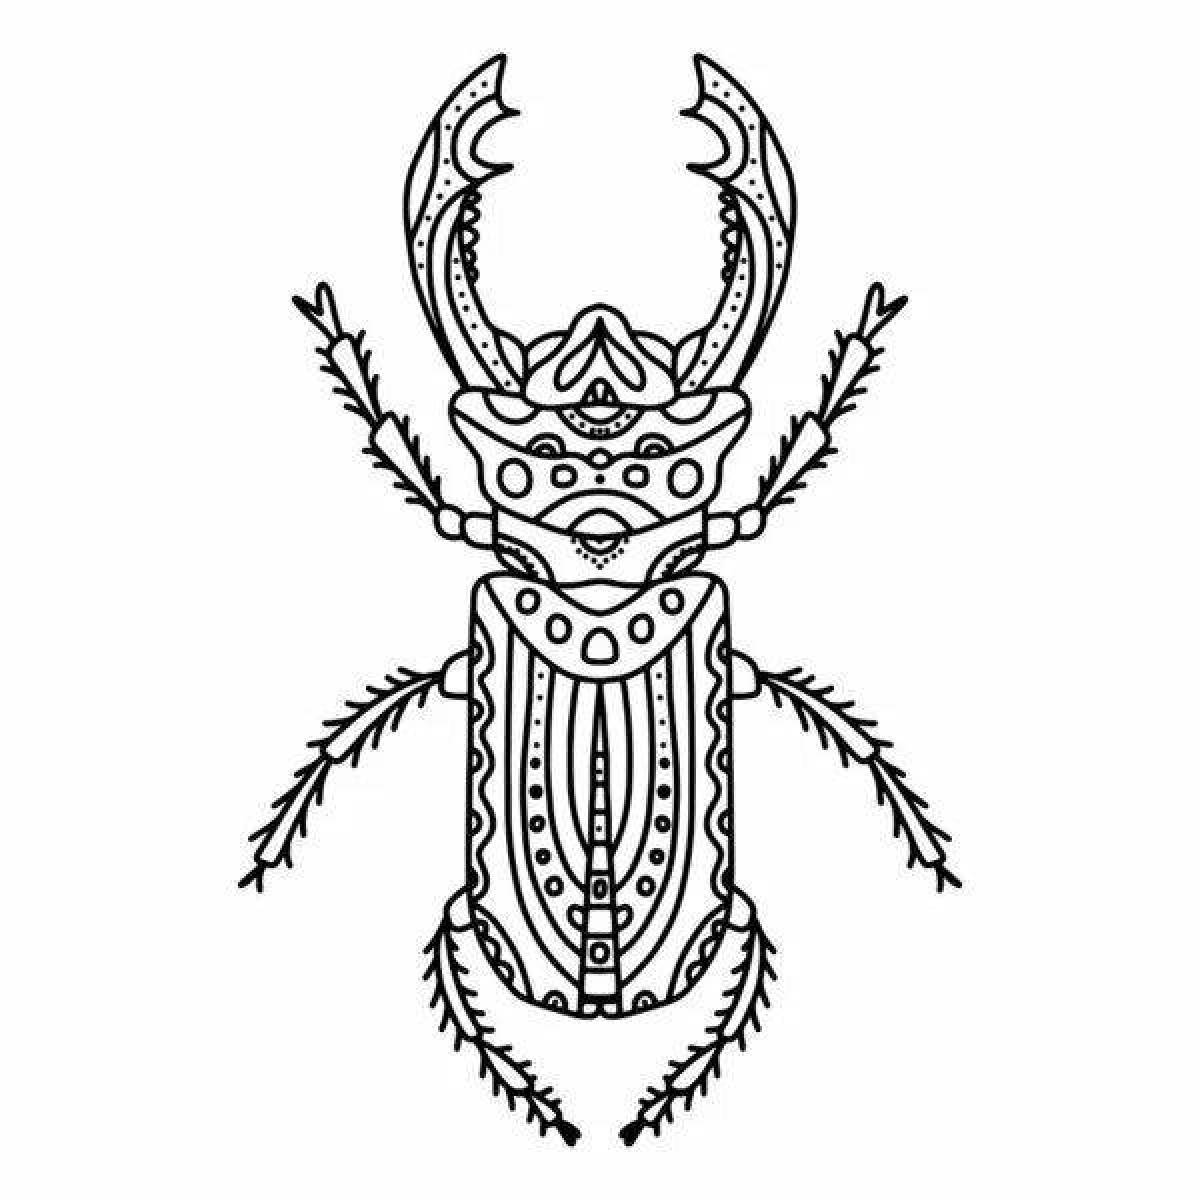 Stag beetle #6